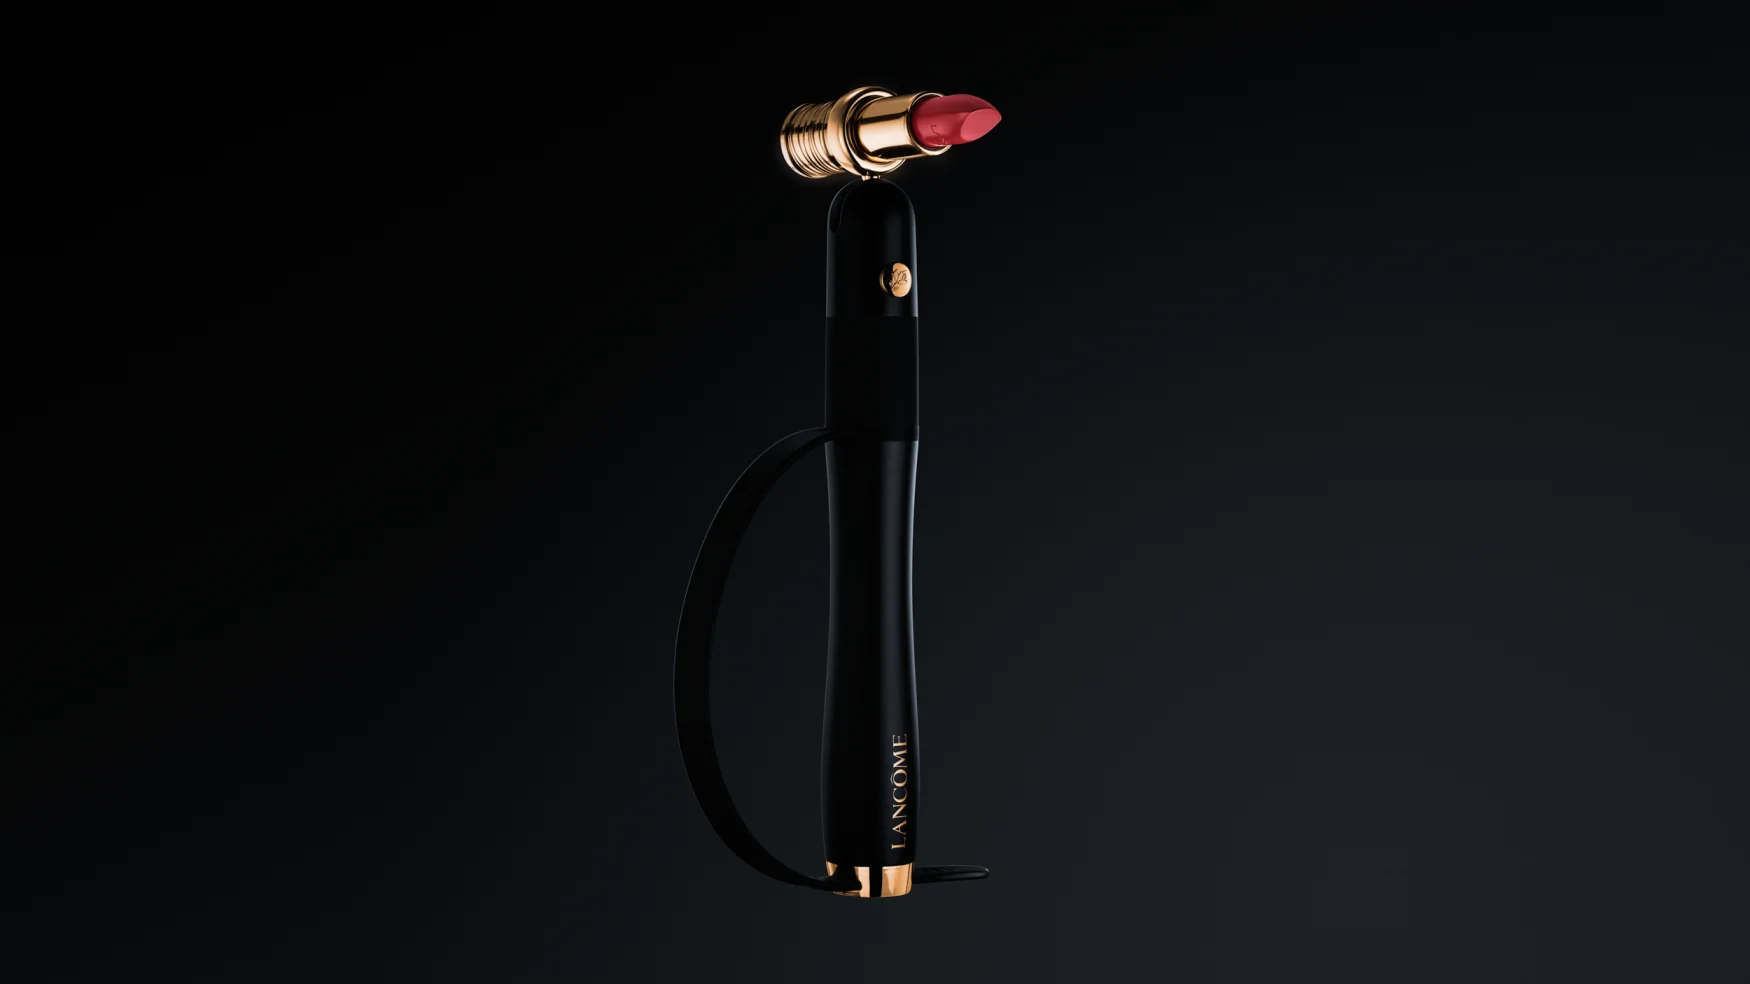 L’Oréal's HAPTA makeup application device with lipstick attached.